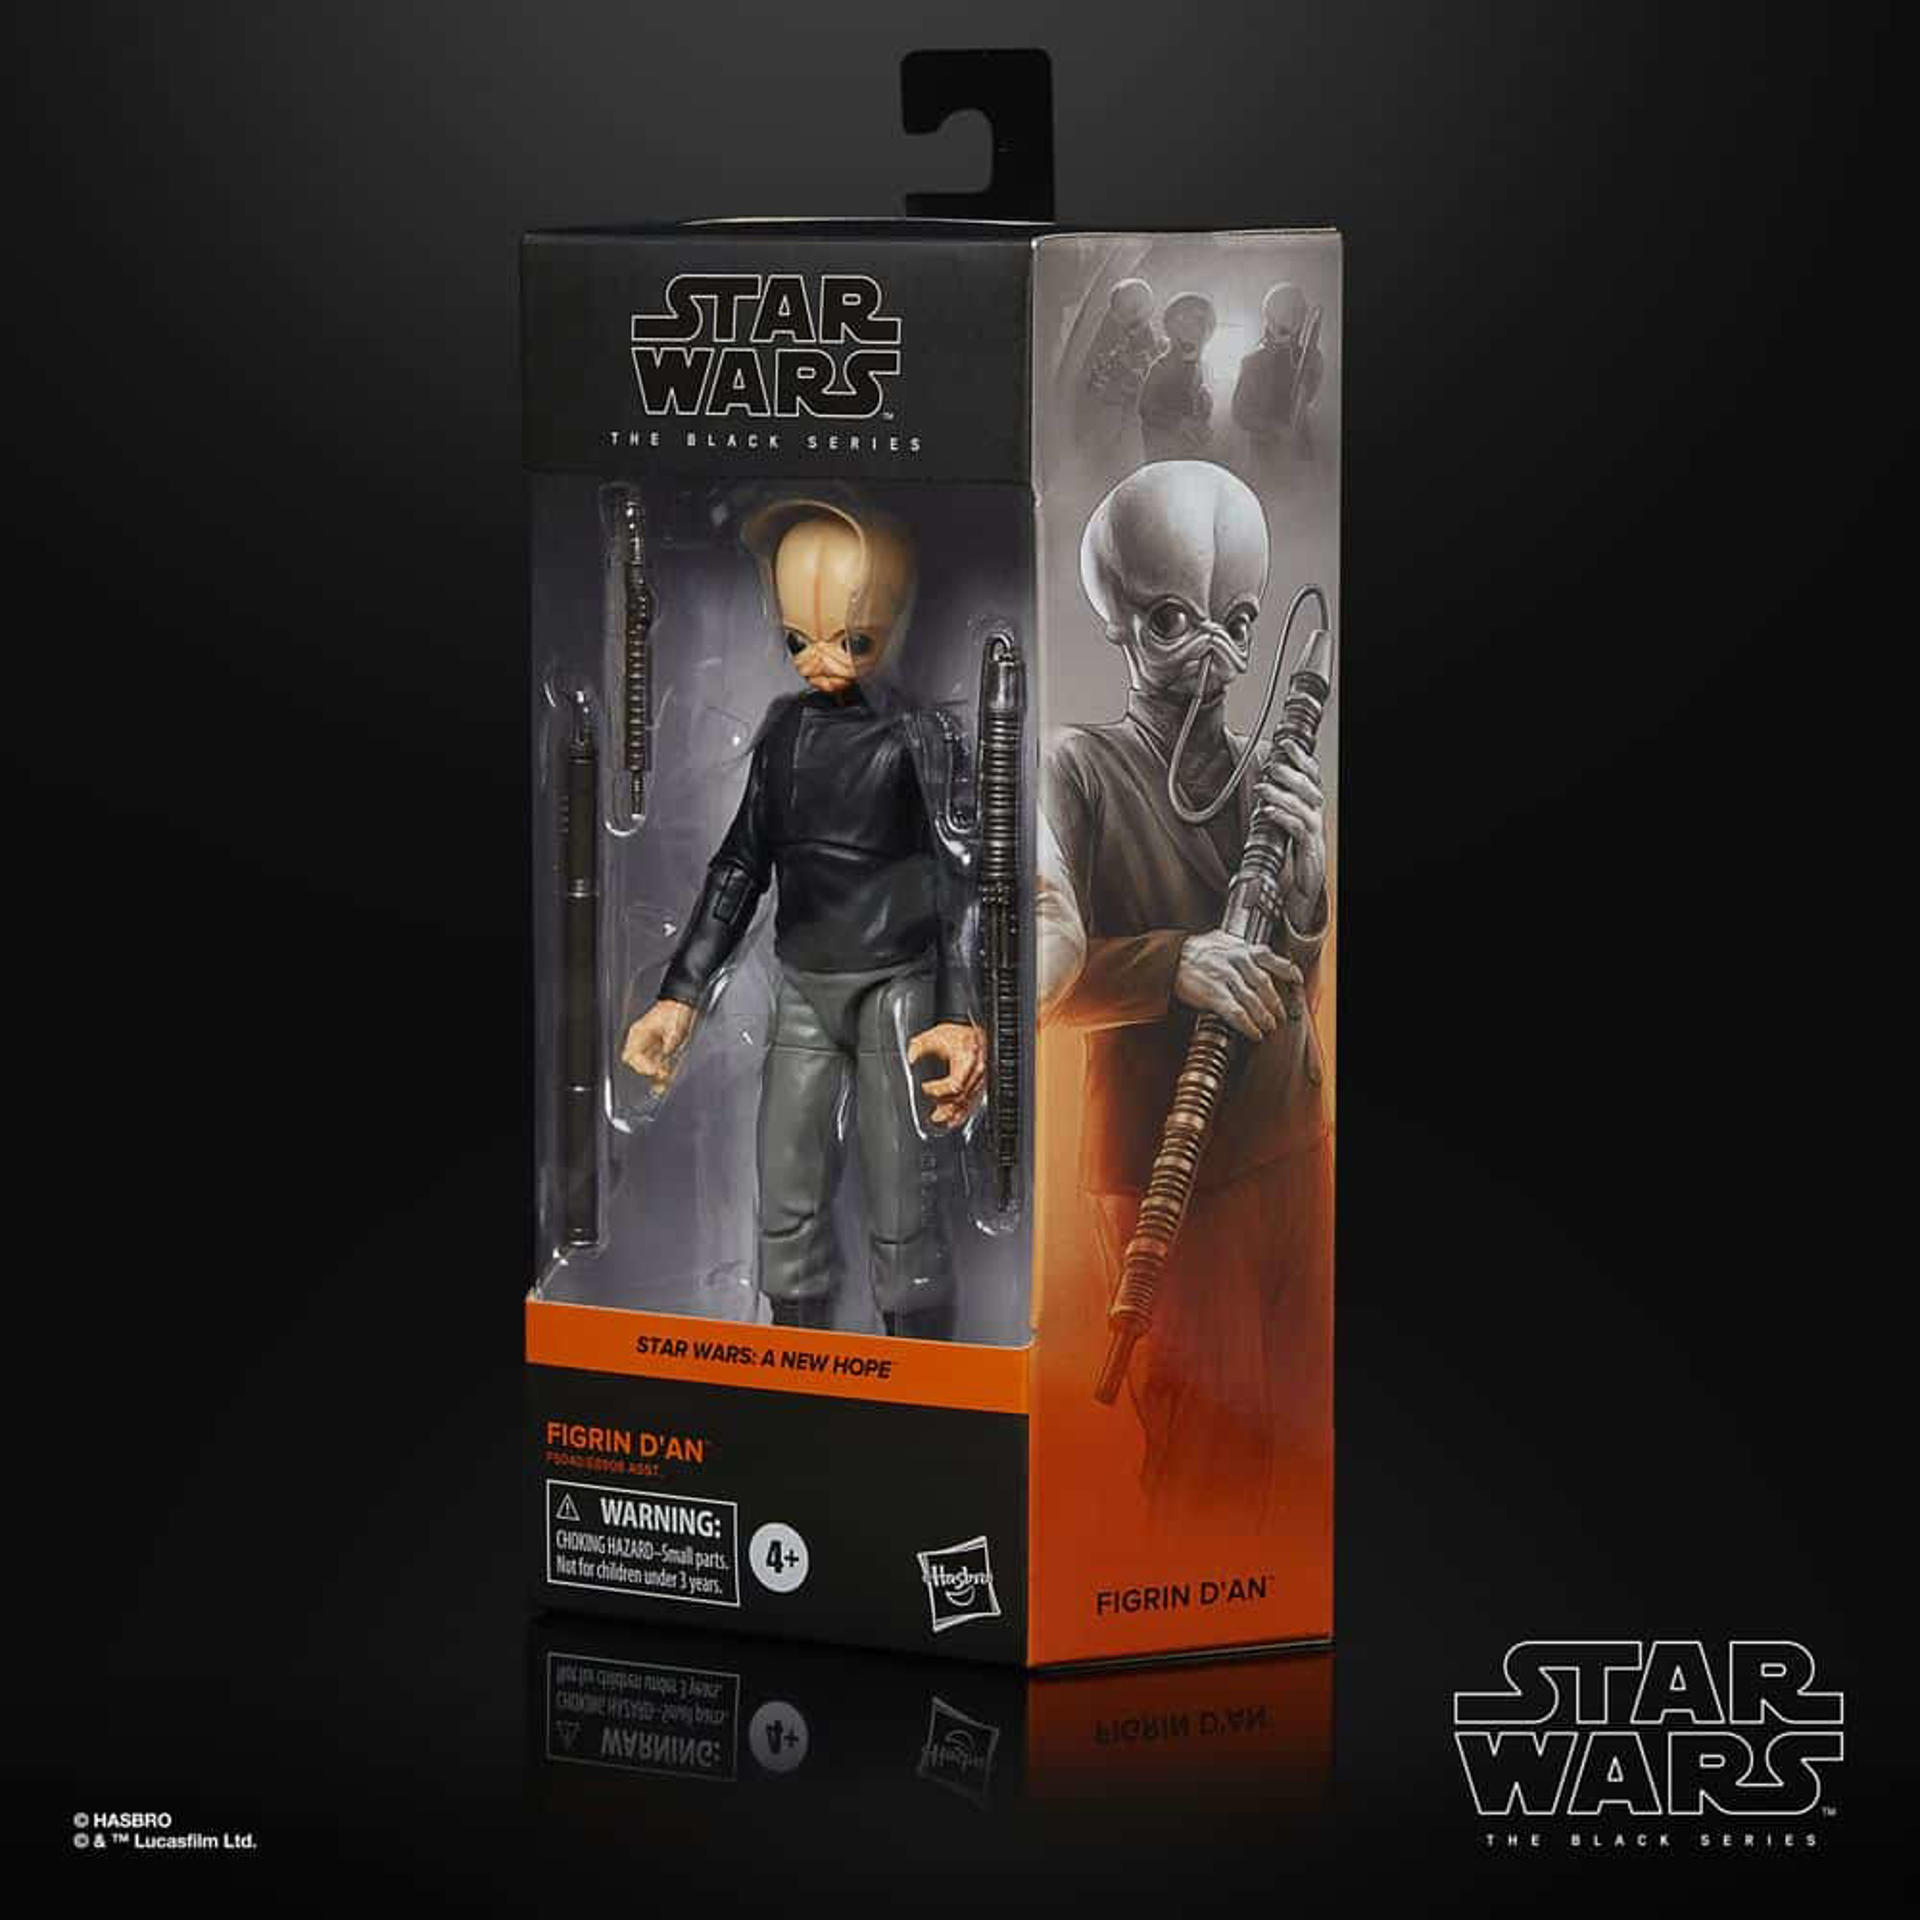 Star Wars The Black Series - Figurine d'action de Figrin D’an 15cm